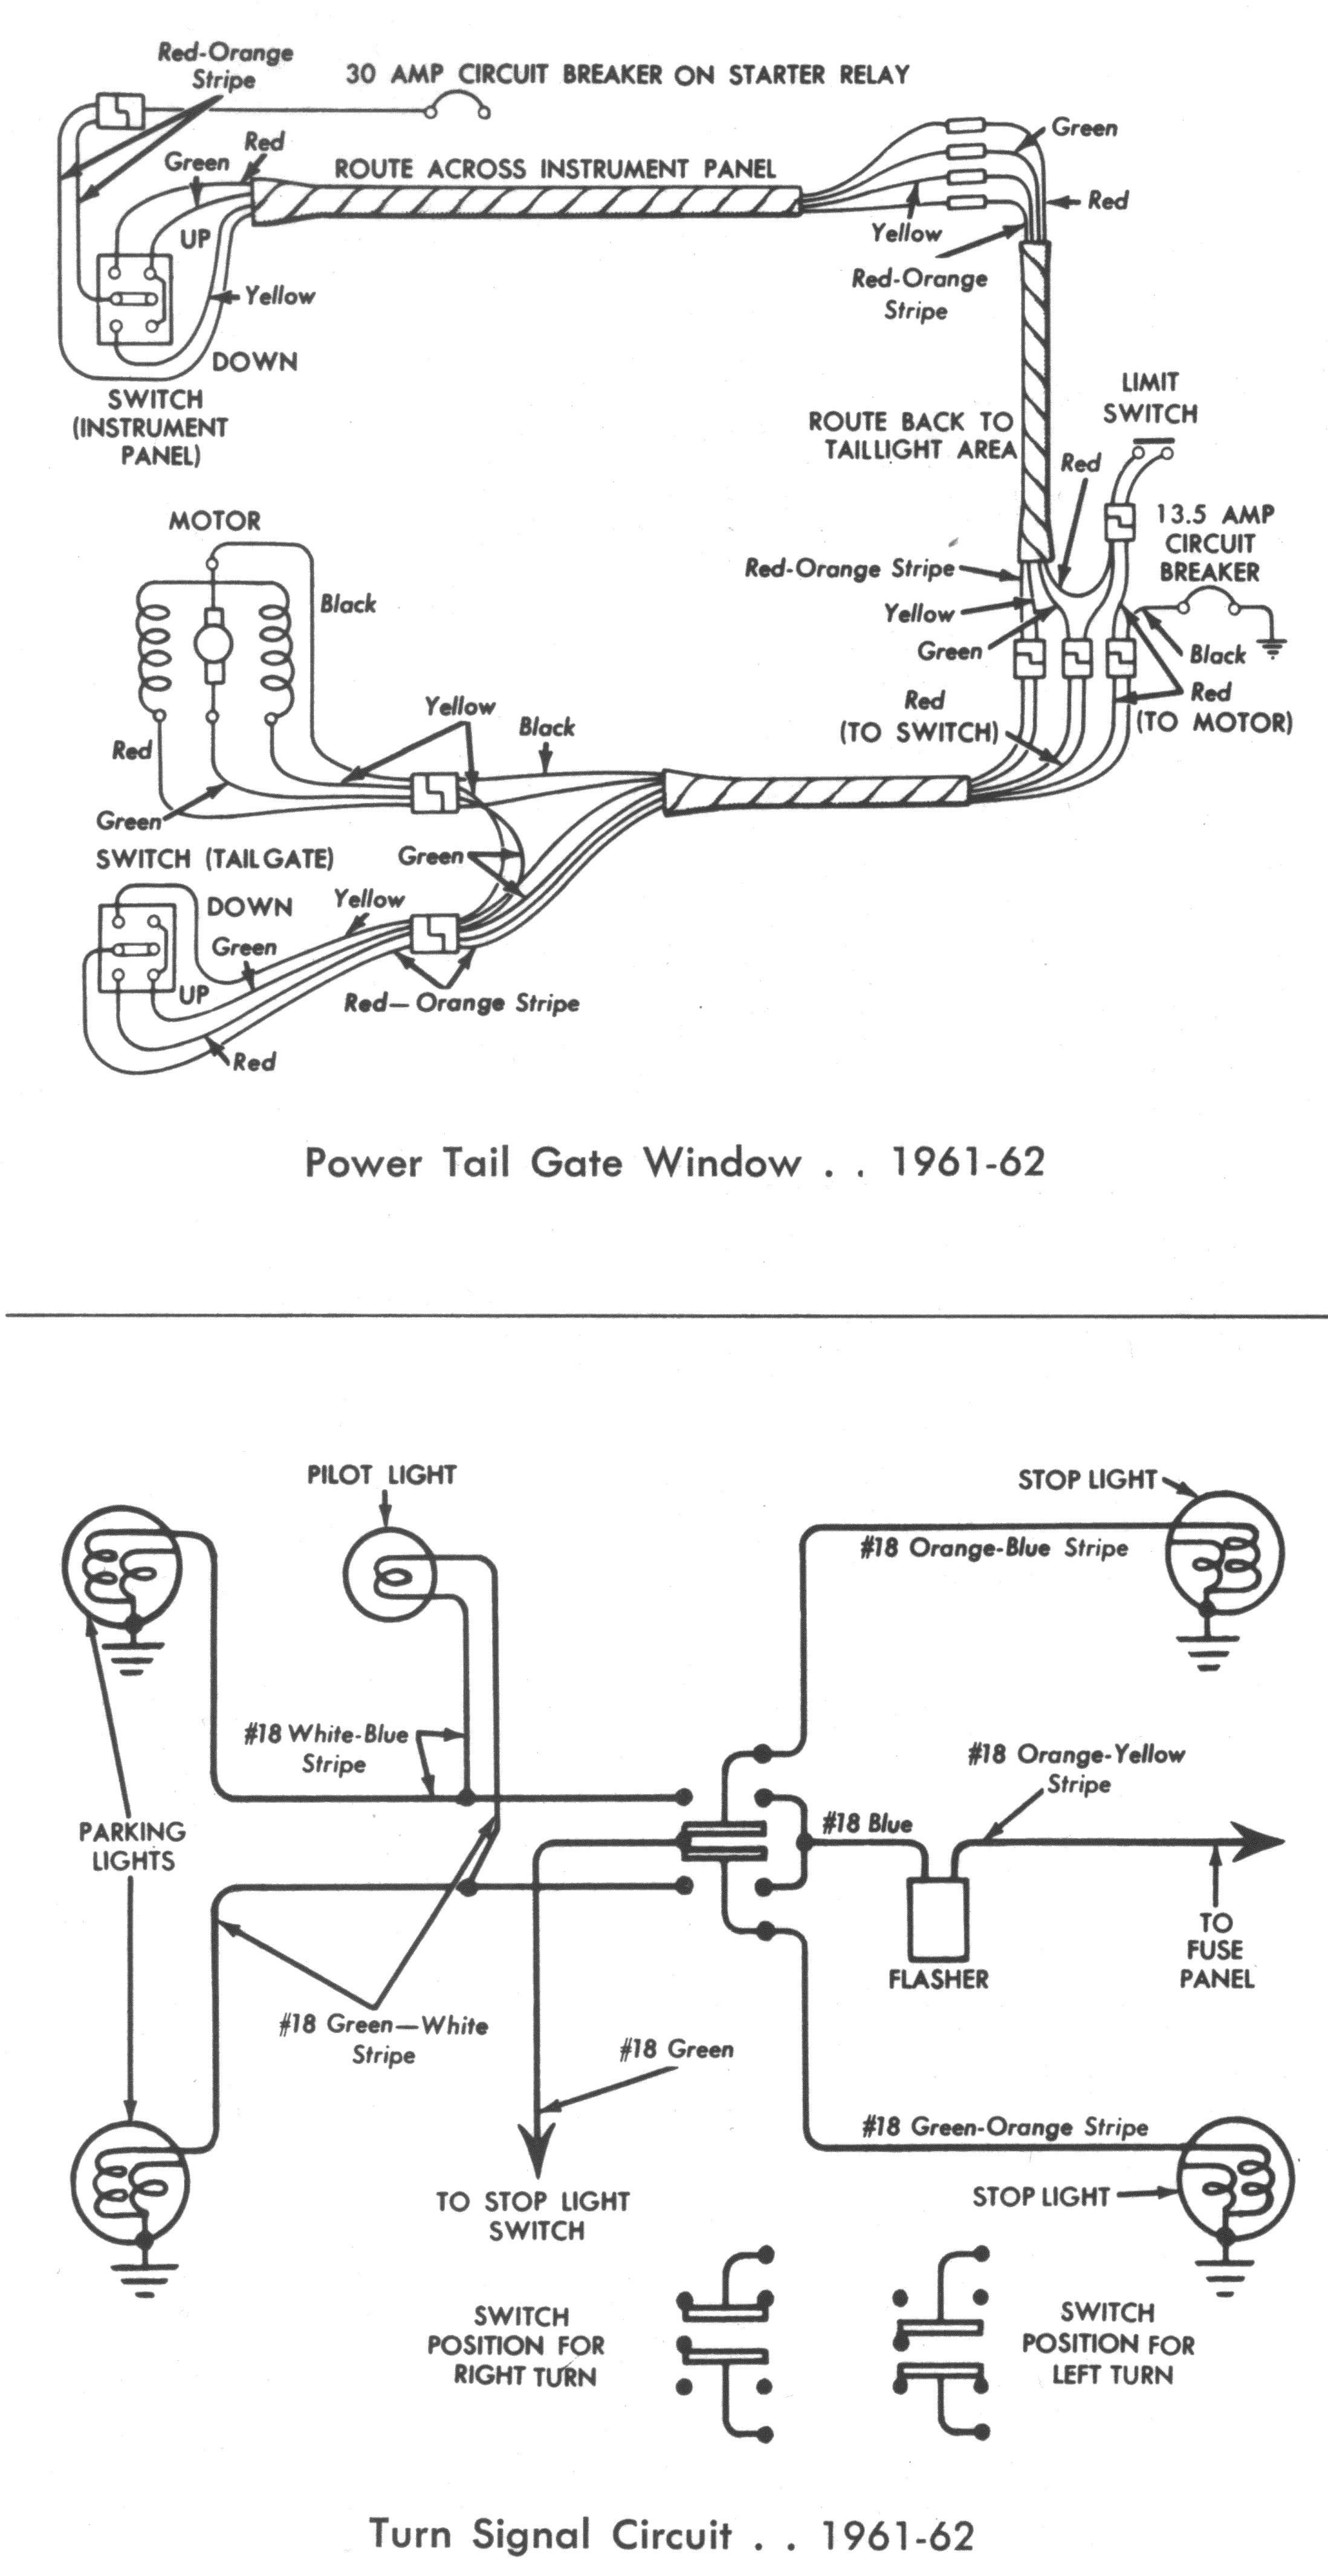 Falcon Wiring Diagrams